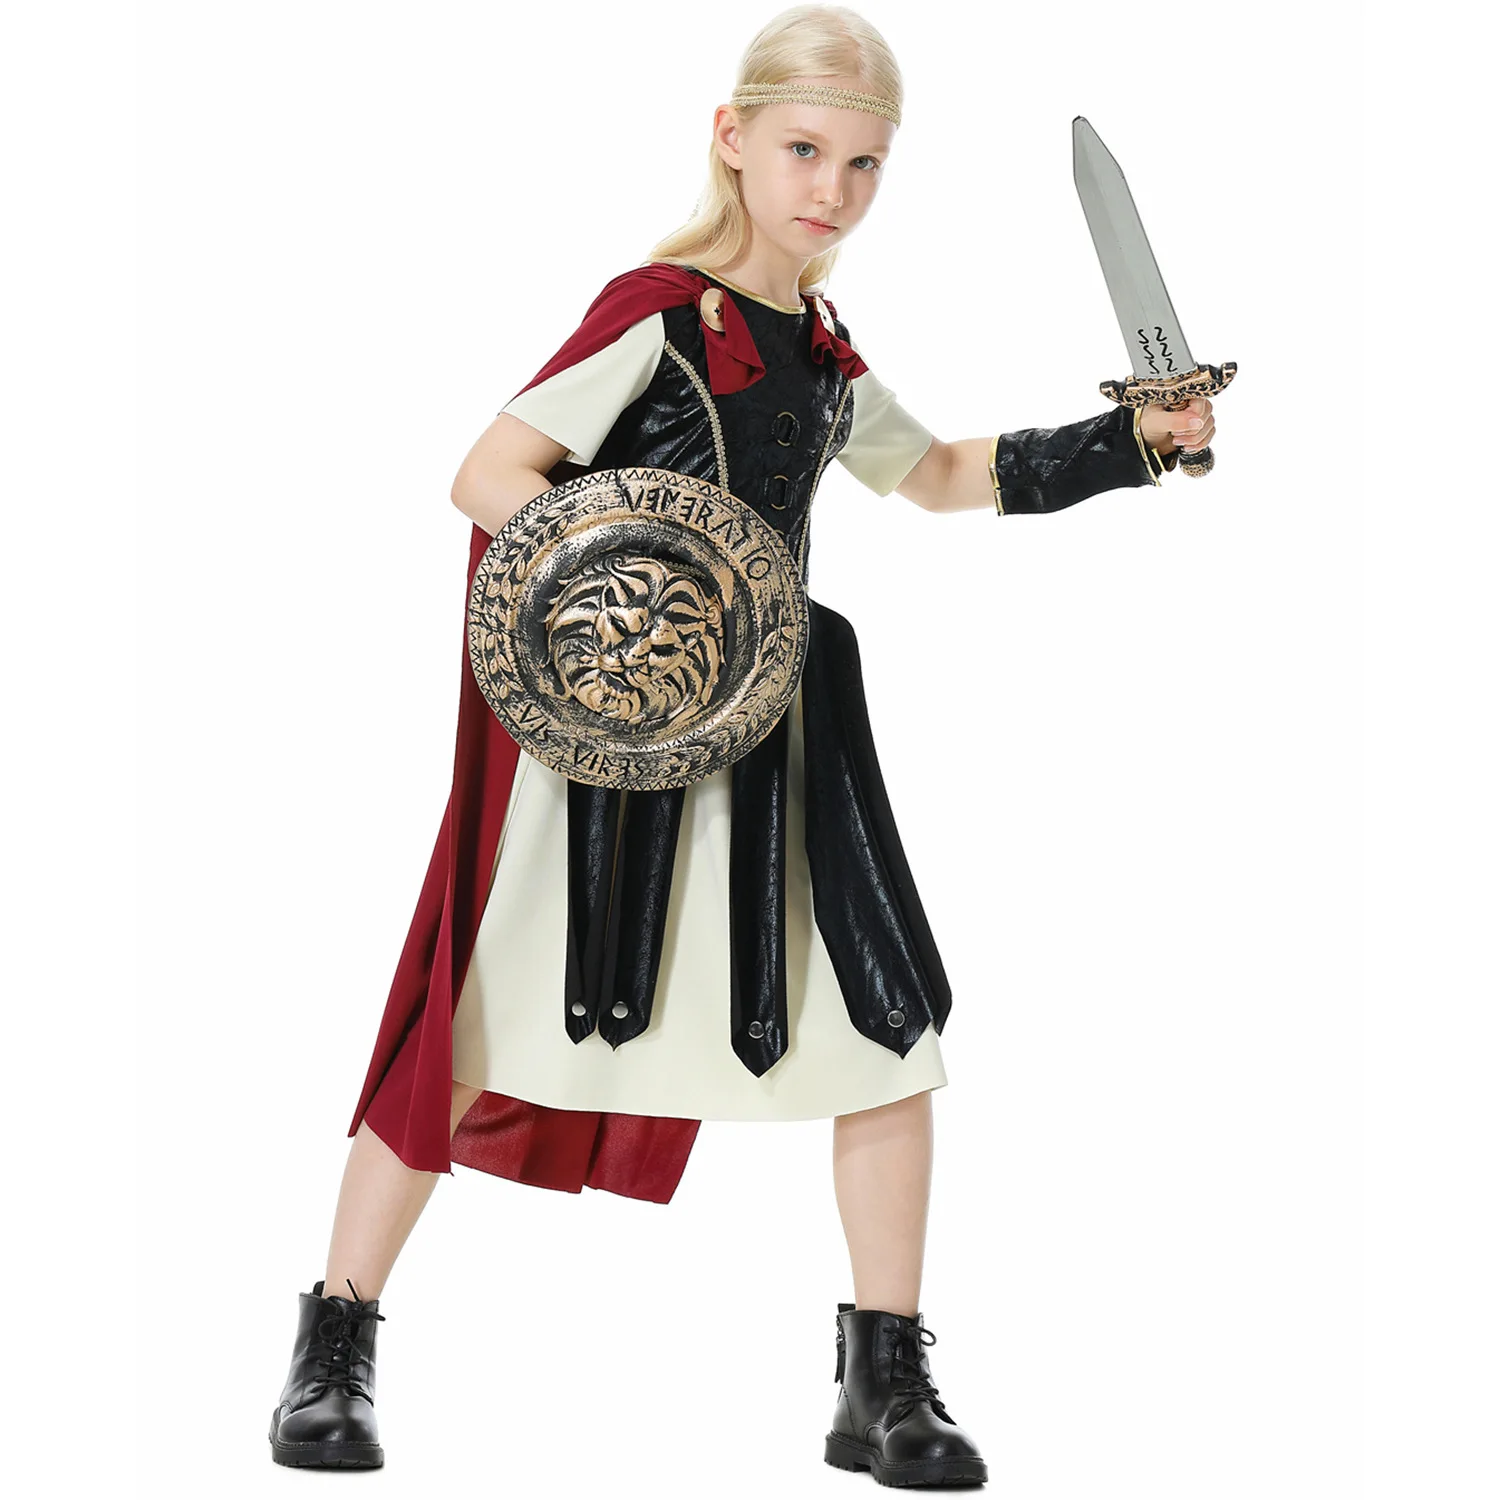 Gladiator Costume for Kids